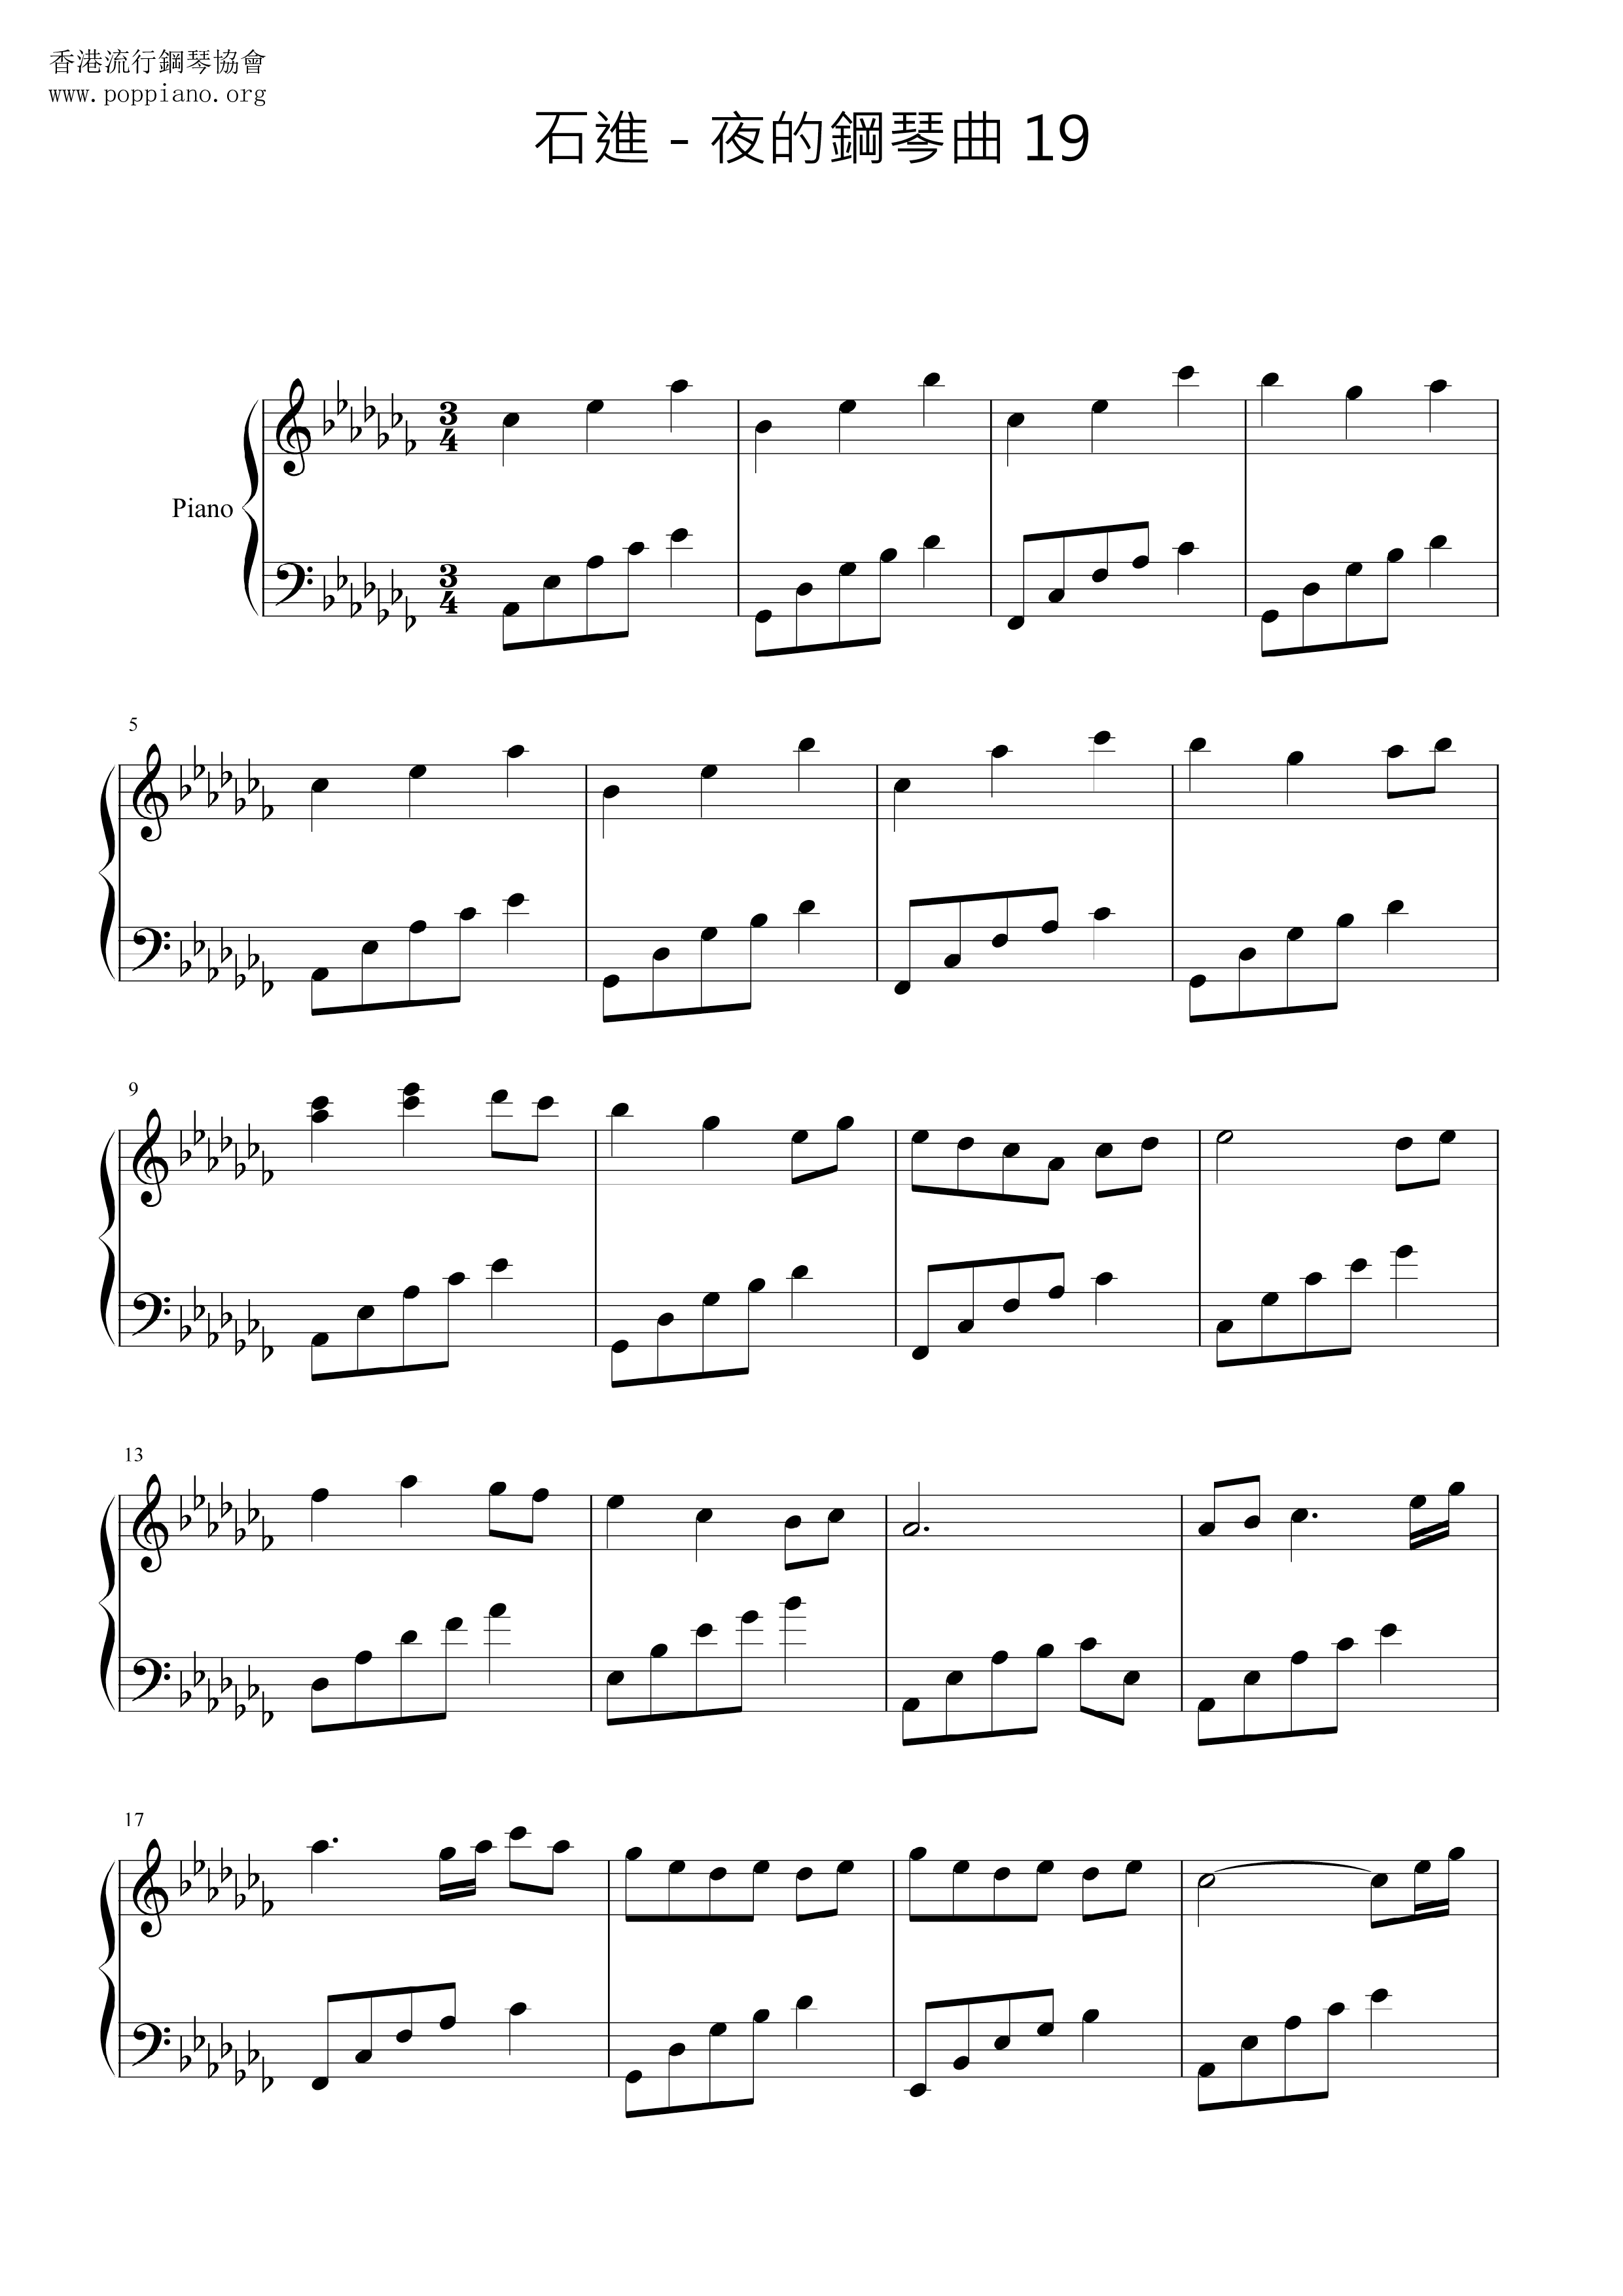 Melody Of The Night 19 Score